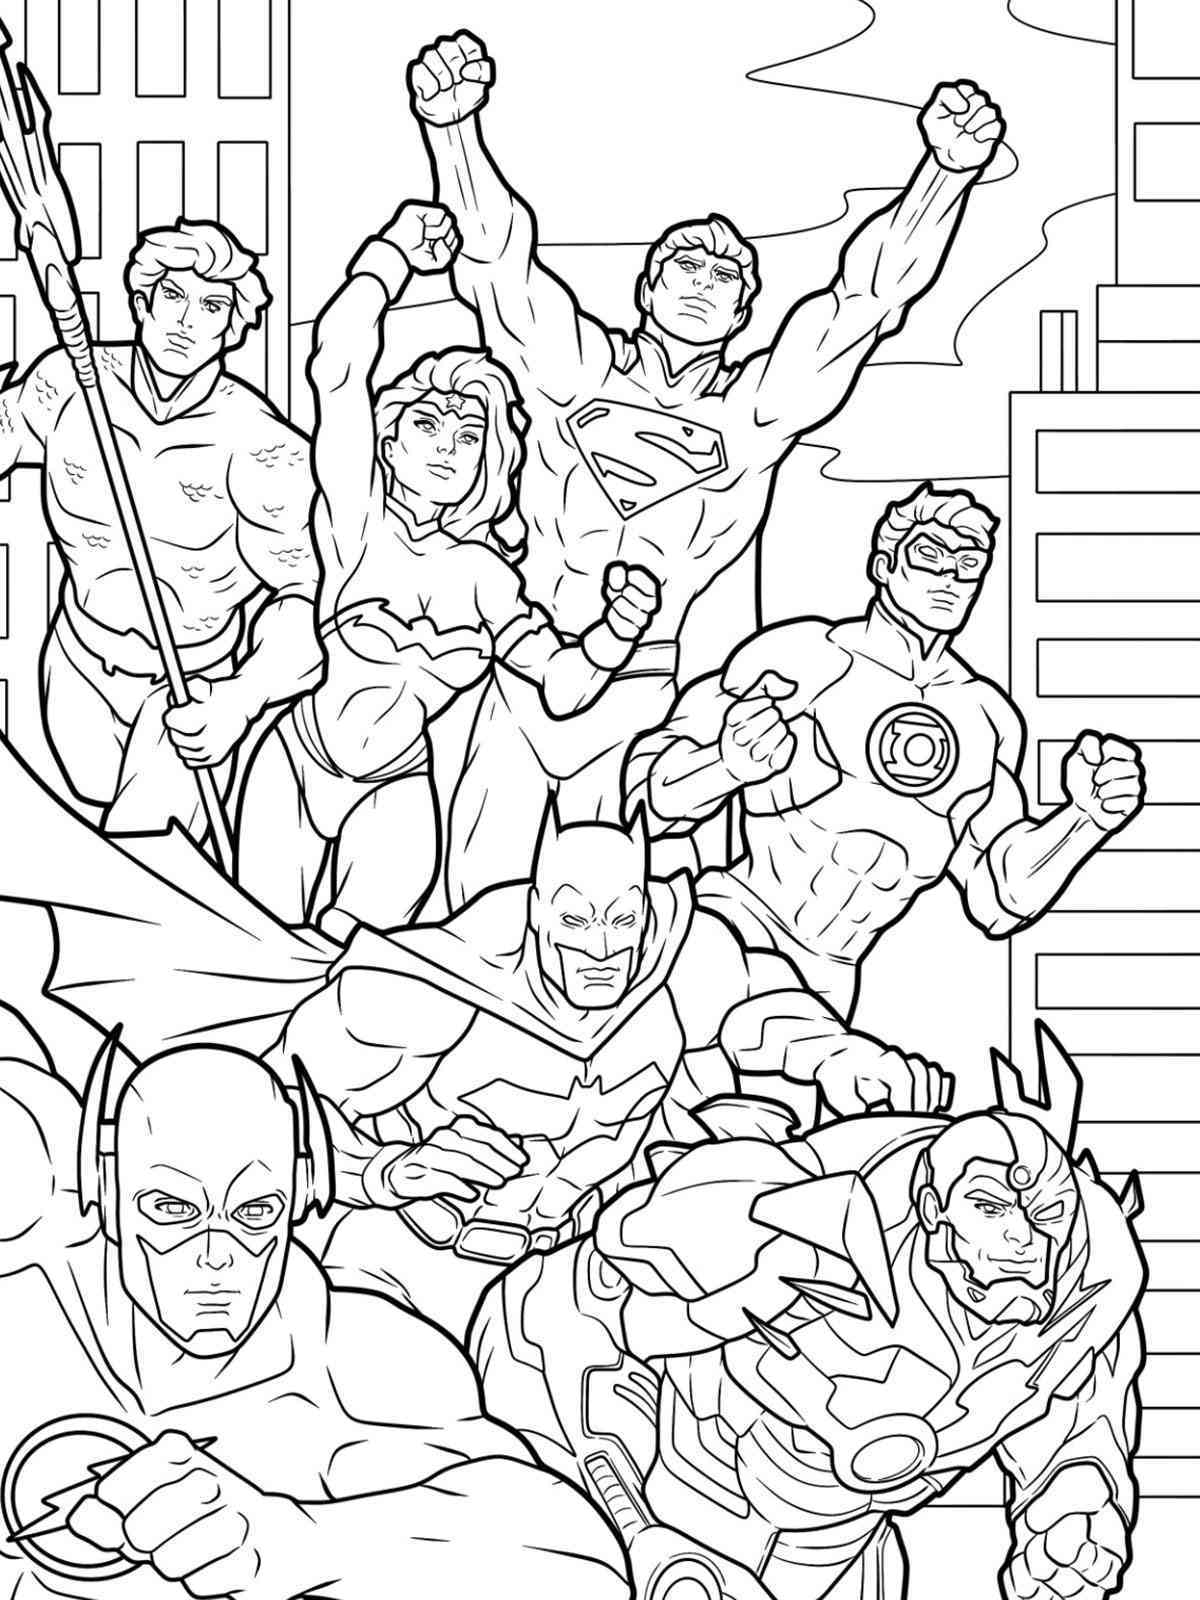 Justice League coloring pages